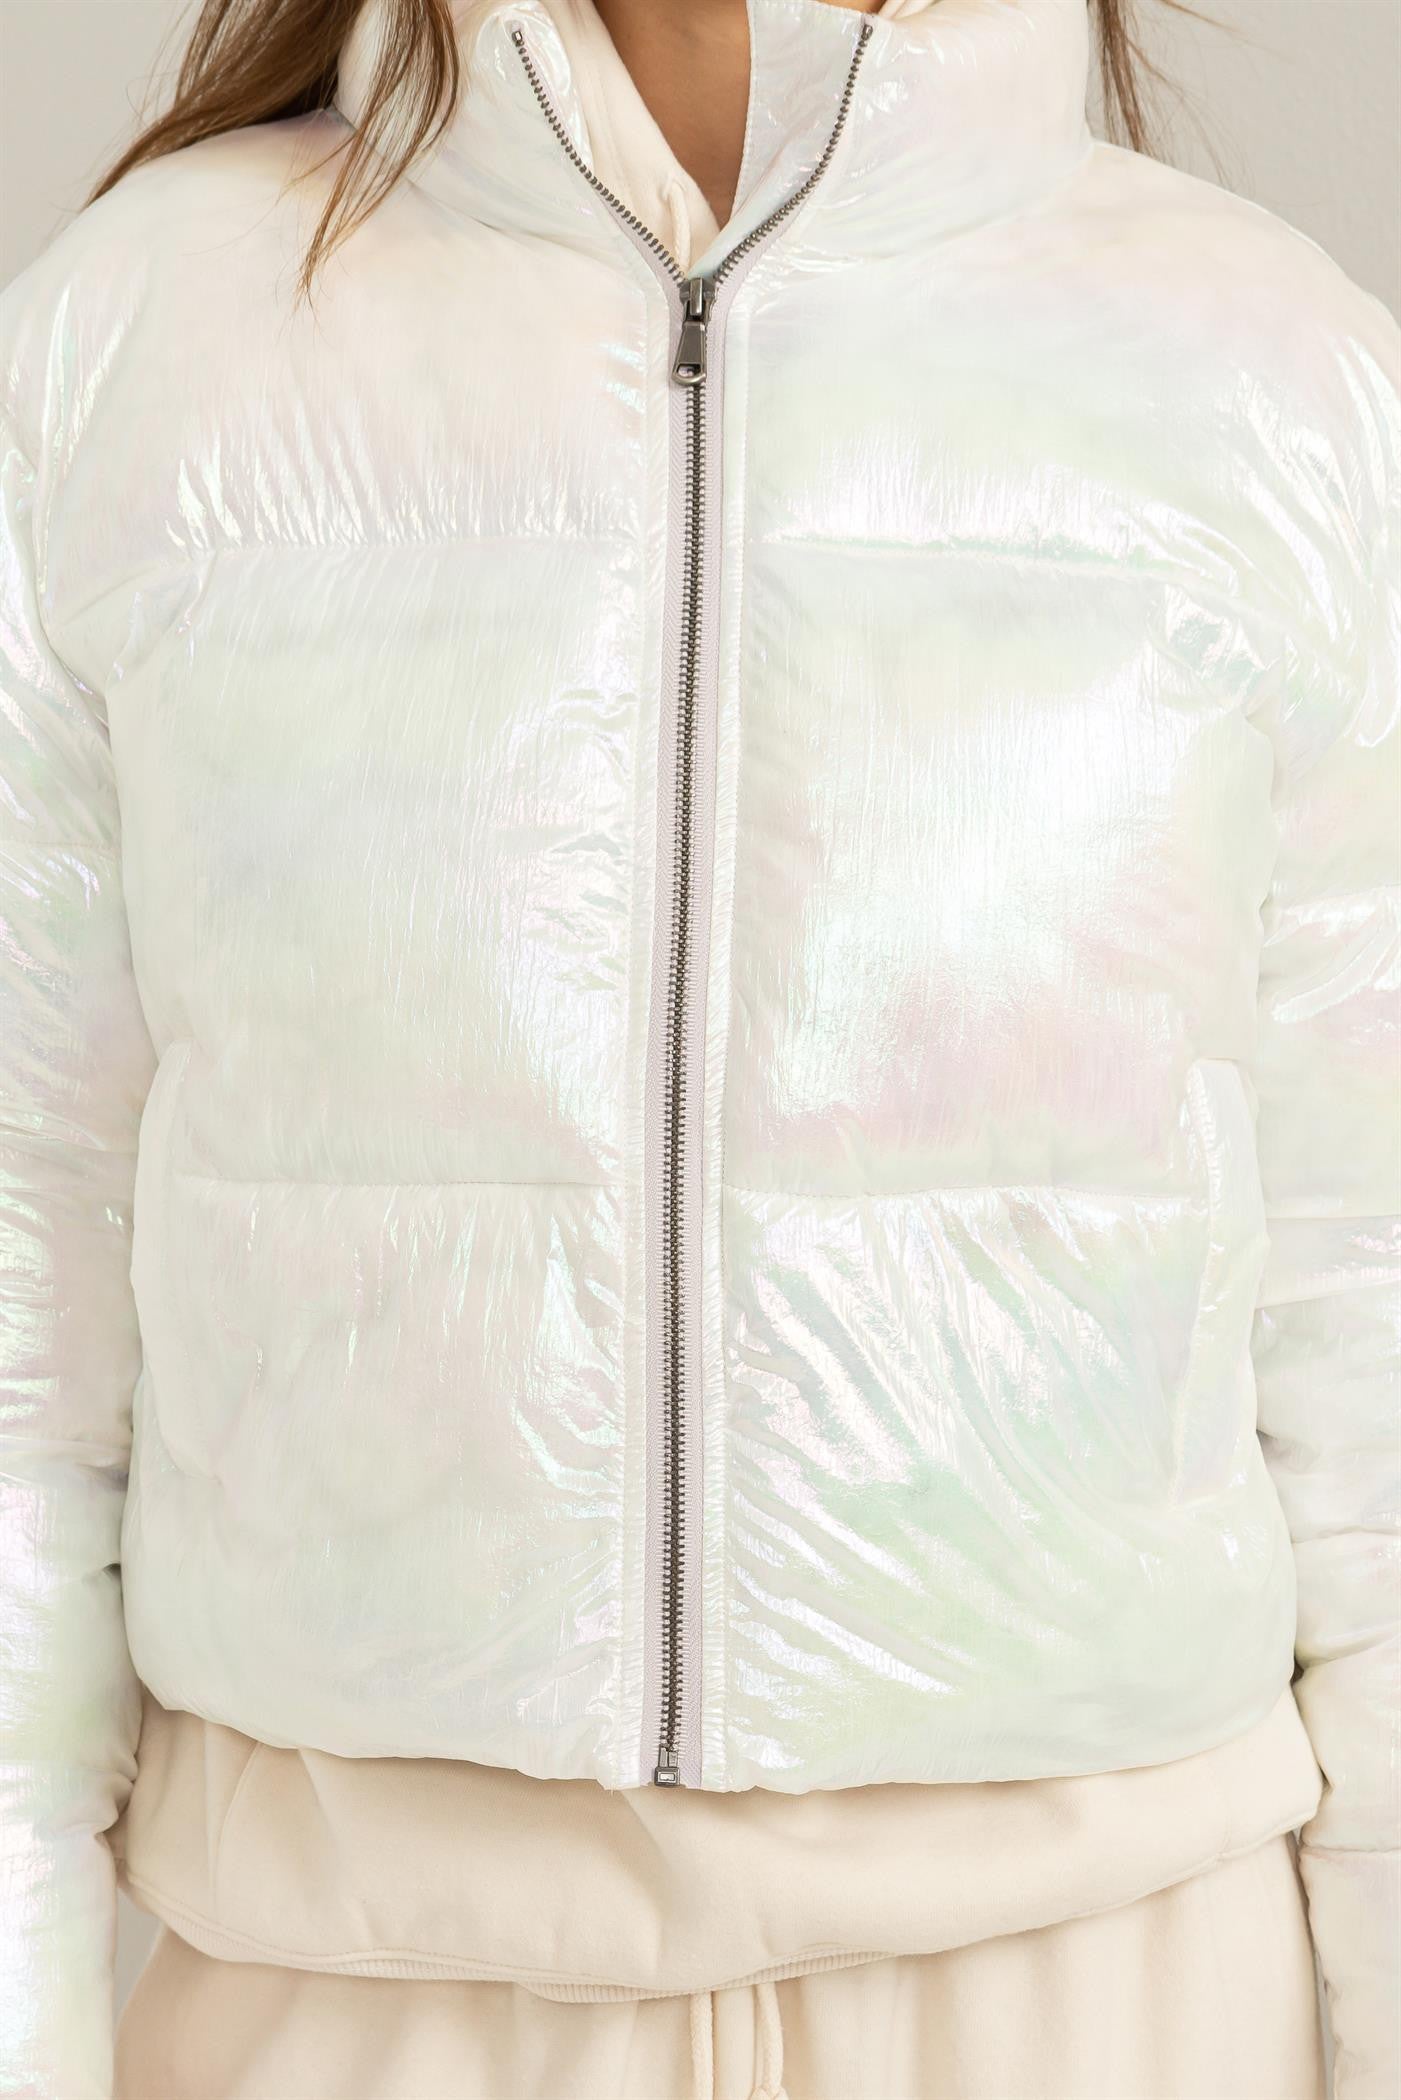 Toronto iridescent Puffer Jacket